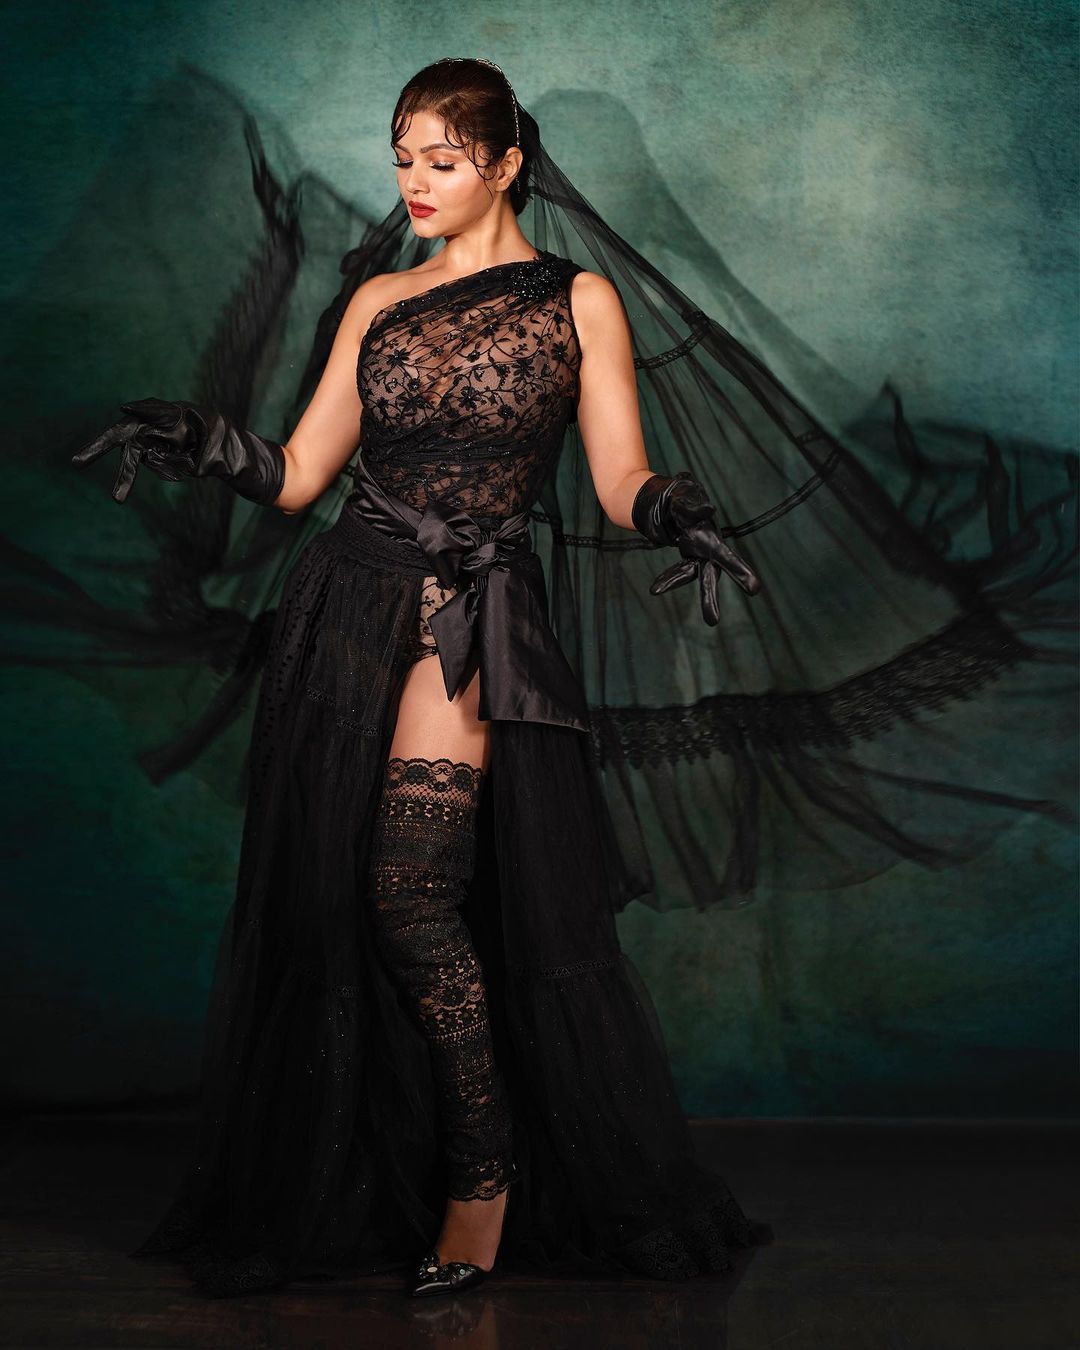 Rubina Dilaik looked stunning in the black bridal dress